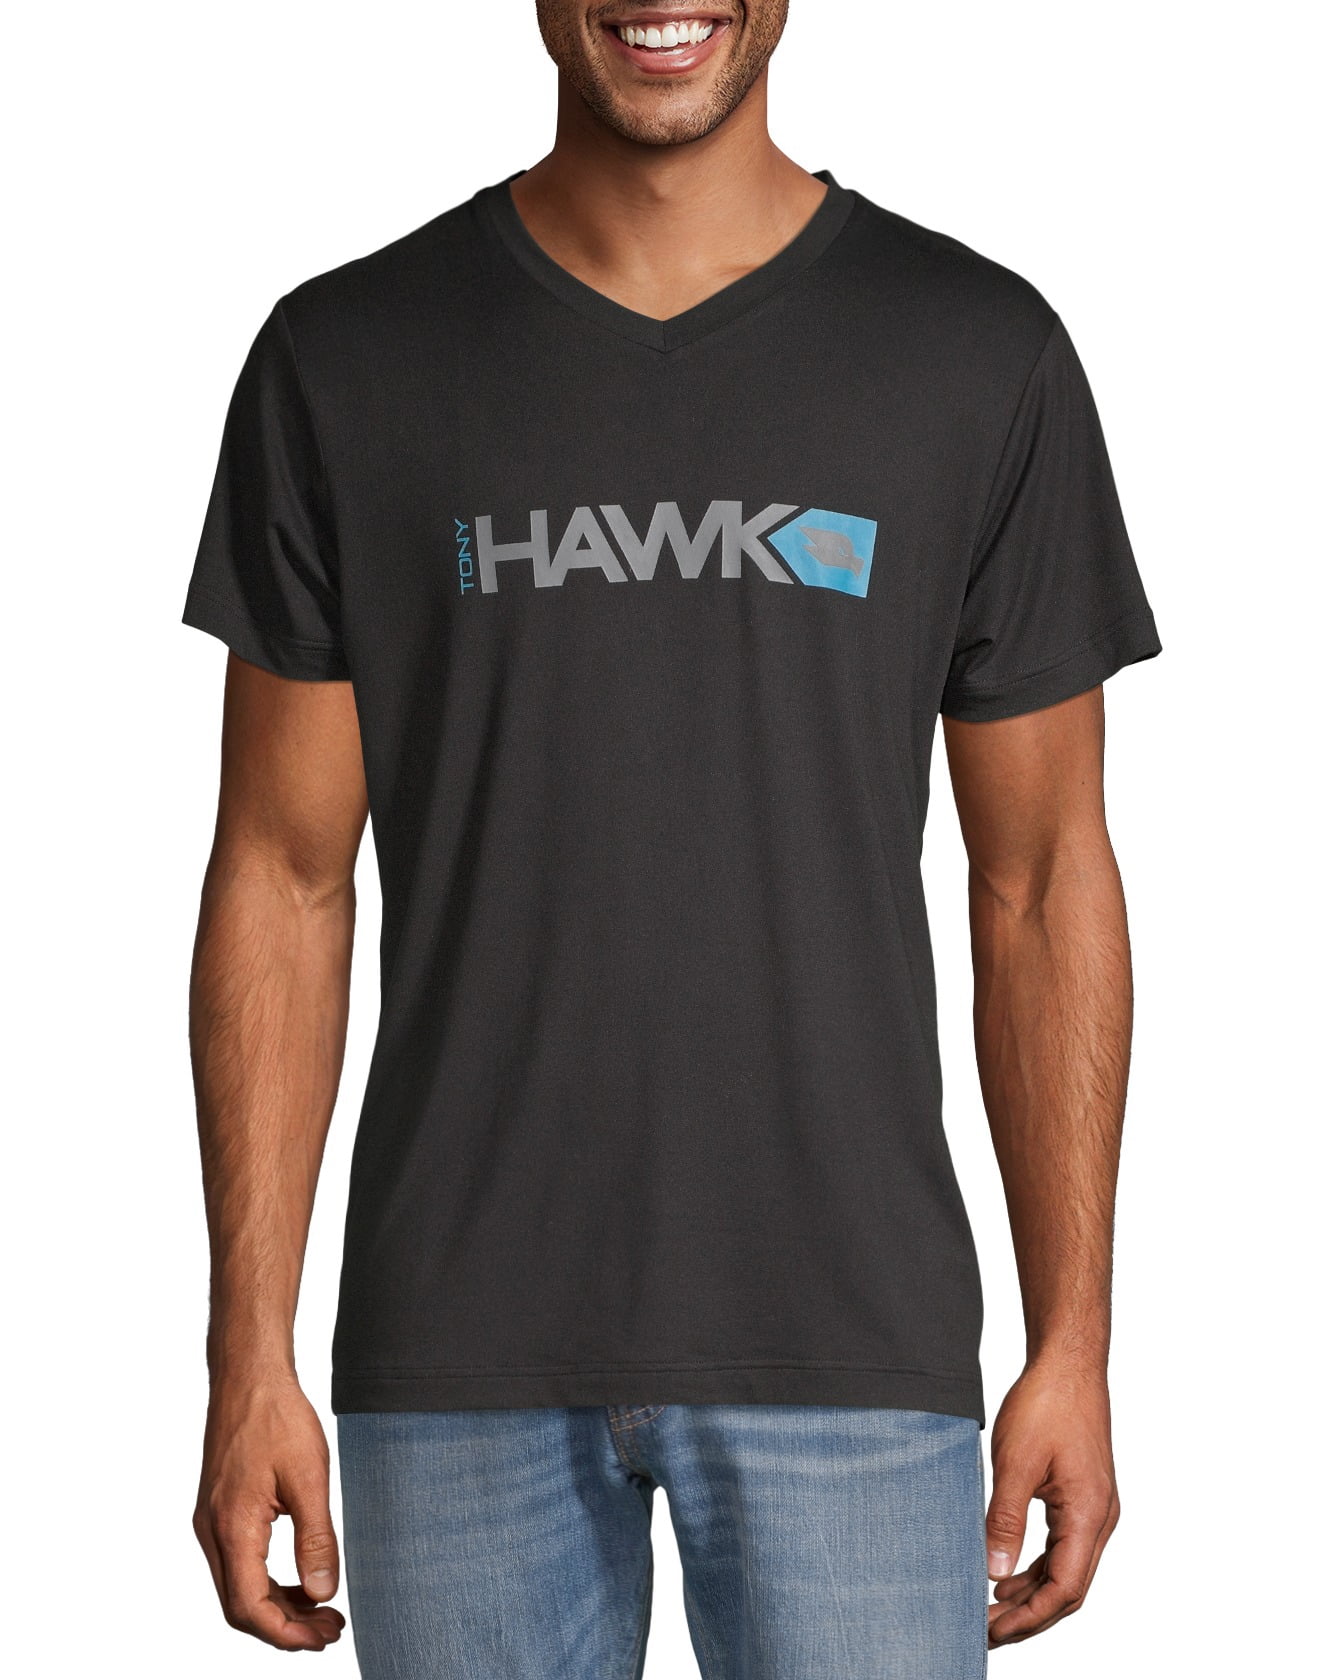 Super Soft Jersey V-Neck T Shirt Spandex/Polyester Blend Birdman Sleep Pajama TONY HAWK Mens Lounge Shirt